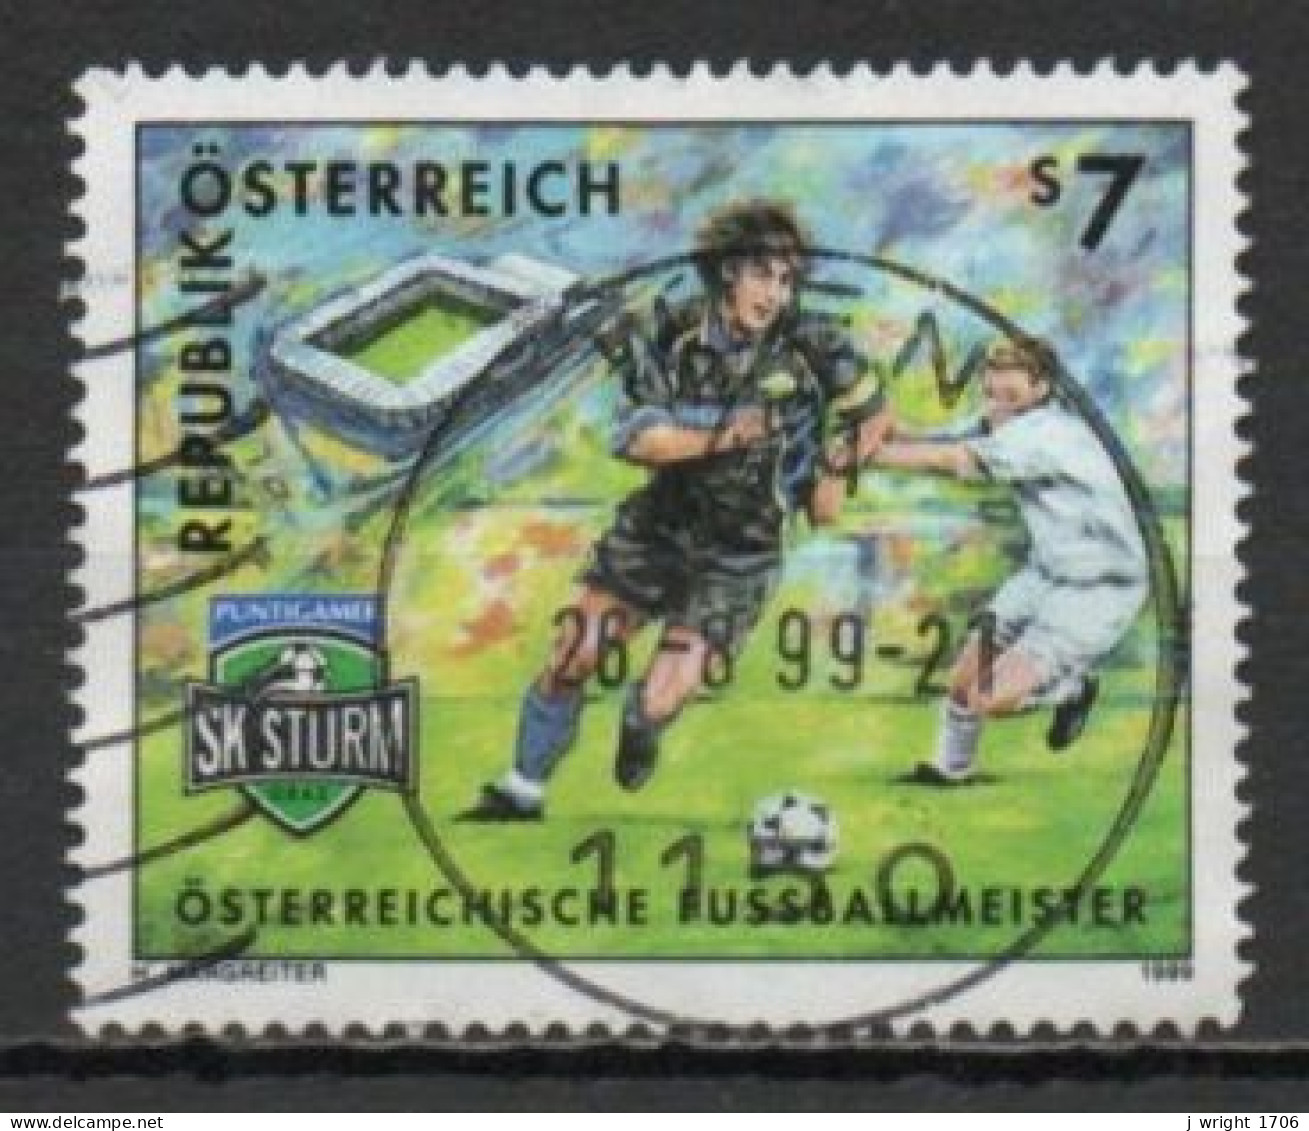 Austria, 1999, SK Puntigamer Sturm Graz Austrian Football Champions, 7s, USED - Usados